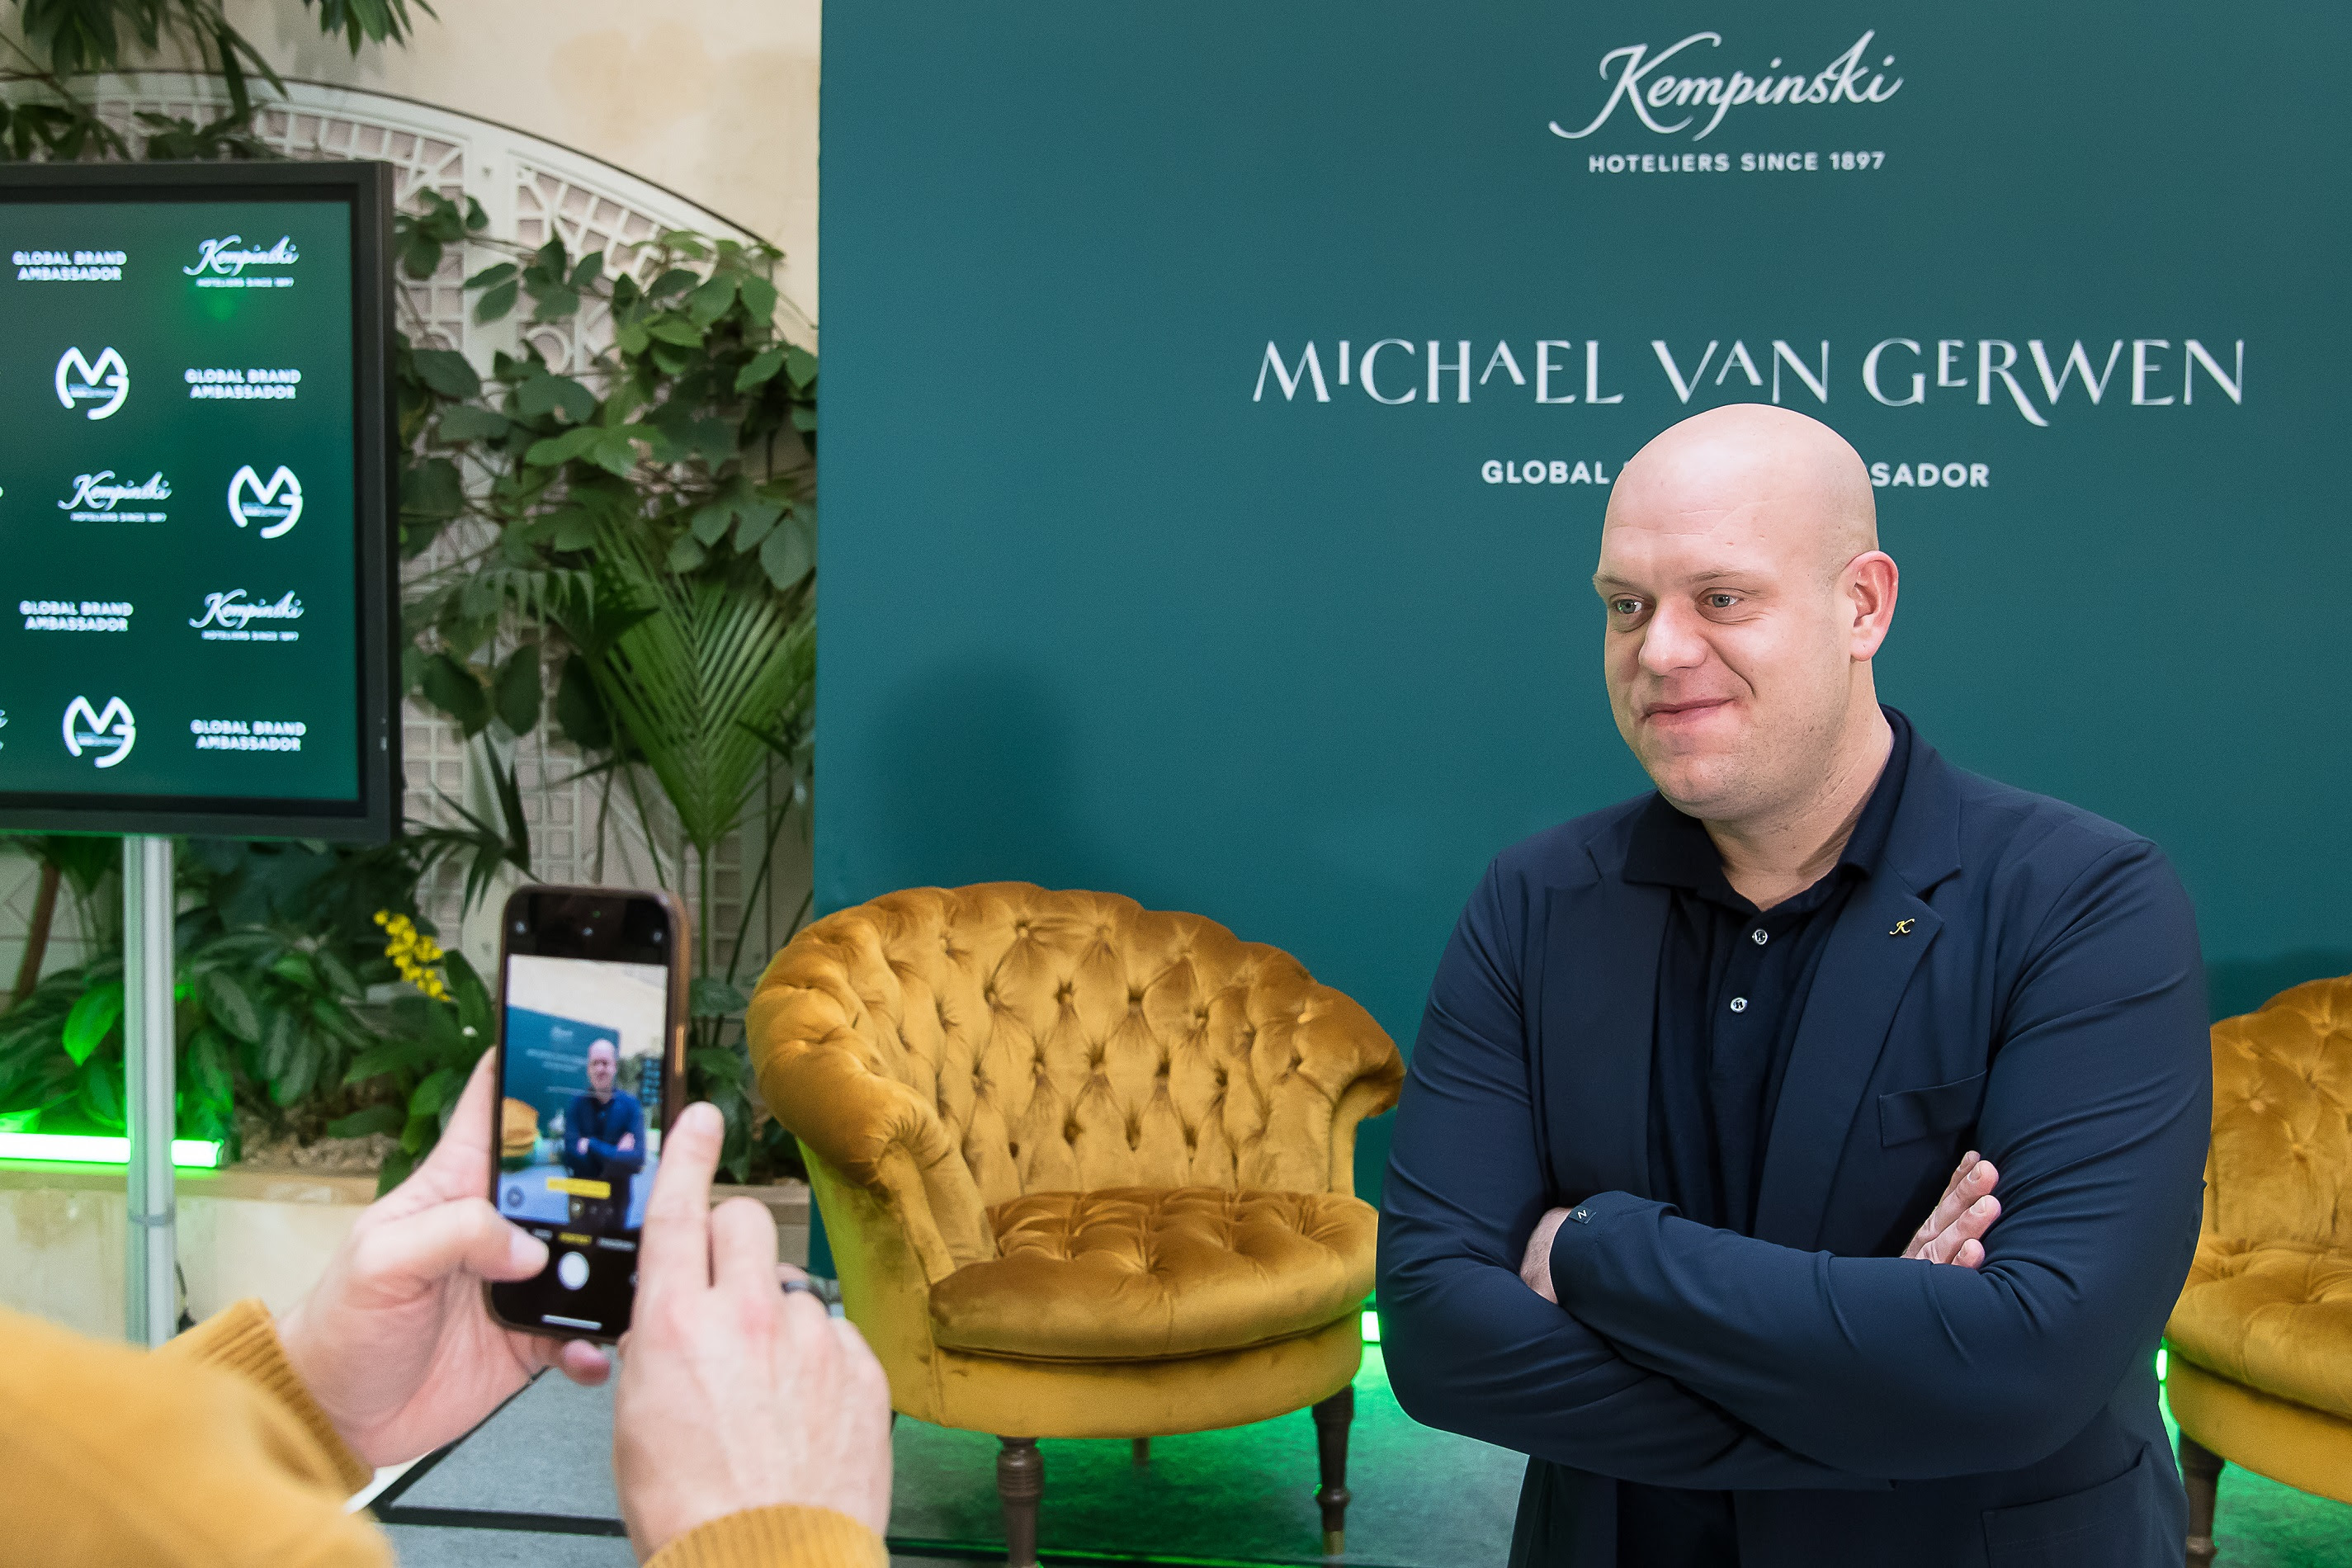 Michael van Gerwen_new brand ambassador Kempinski Hotels 2_copyright Kempinski Hotels.jpg